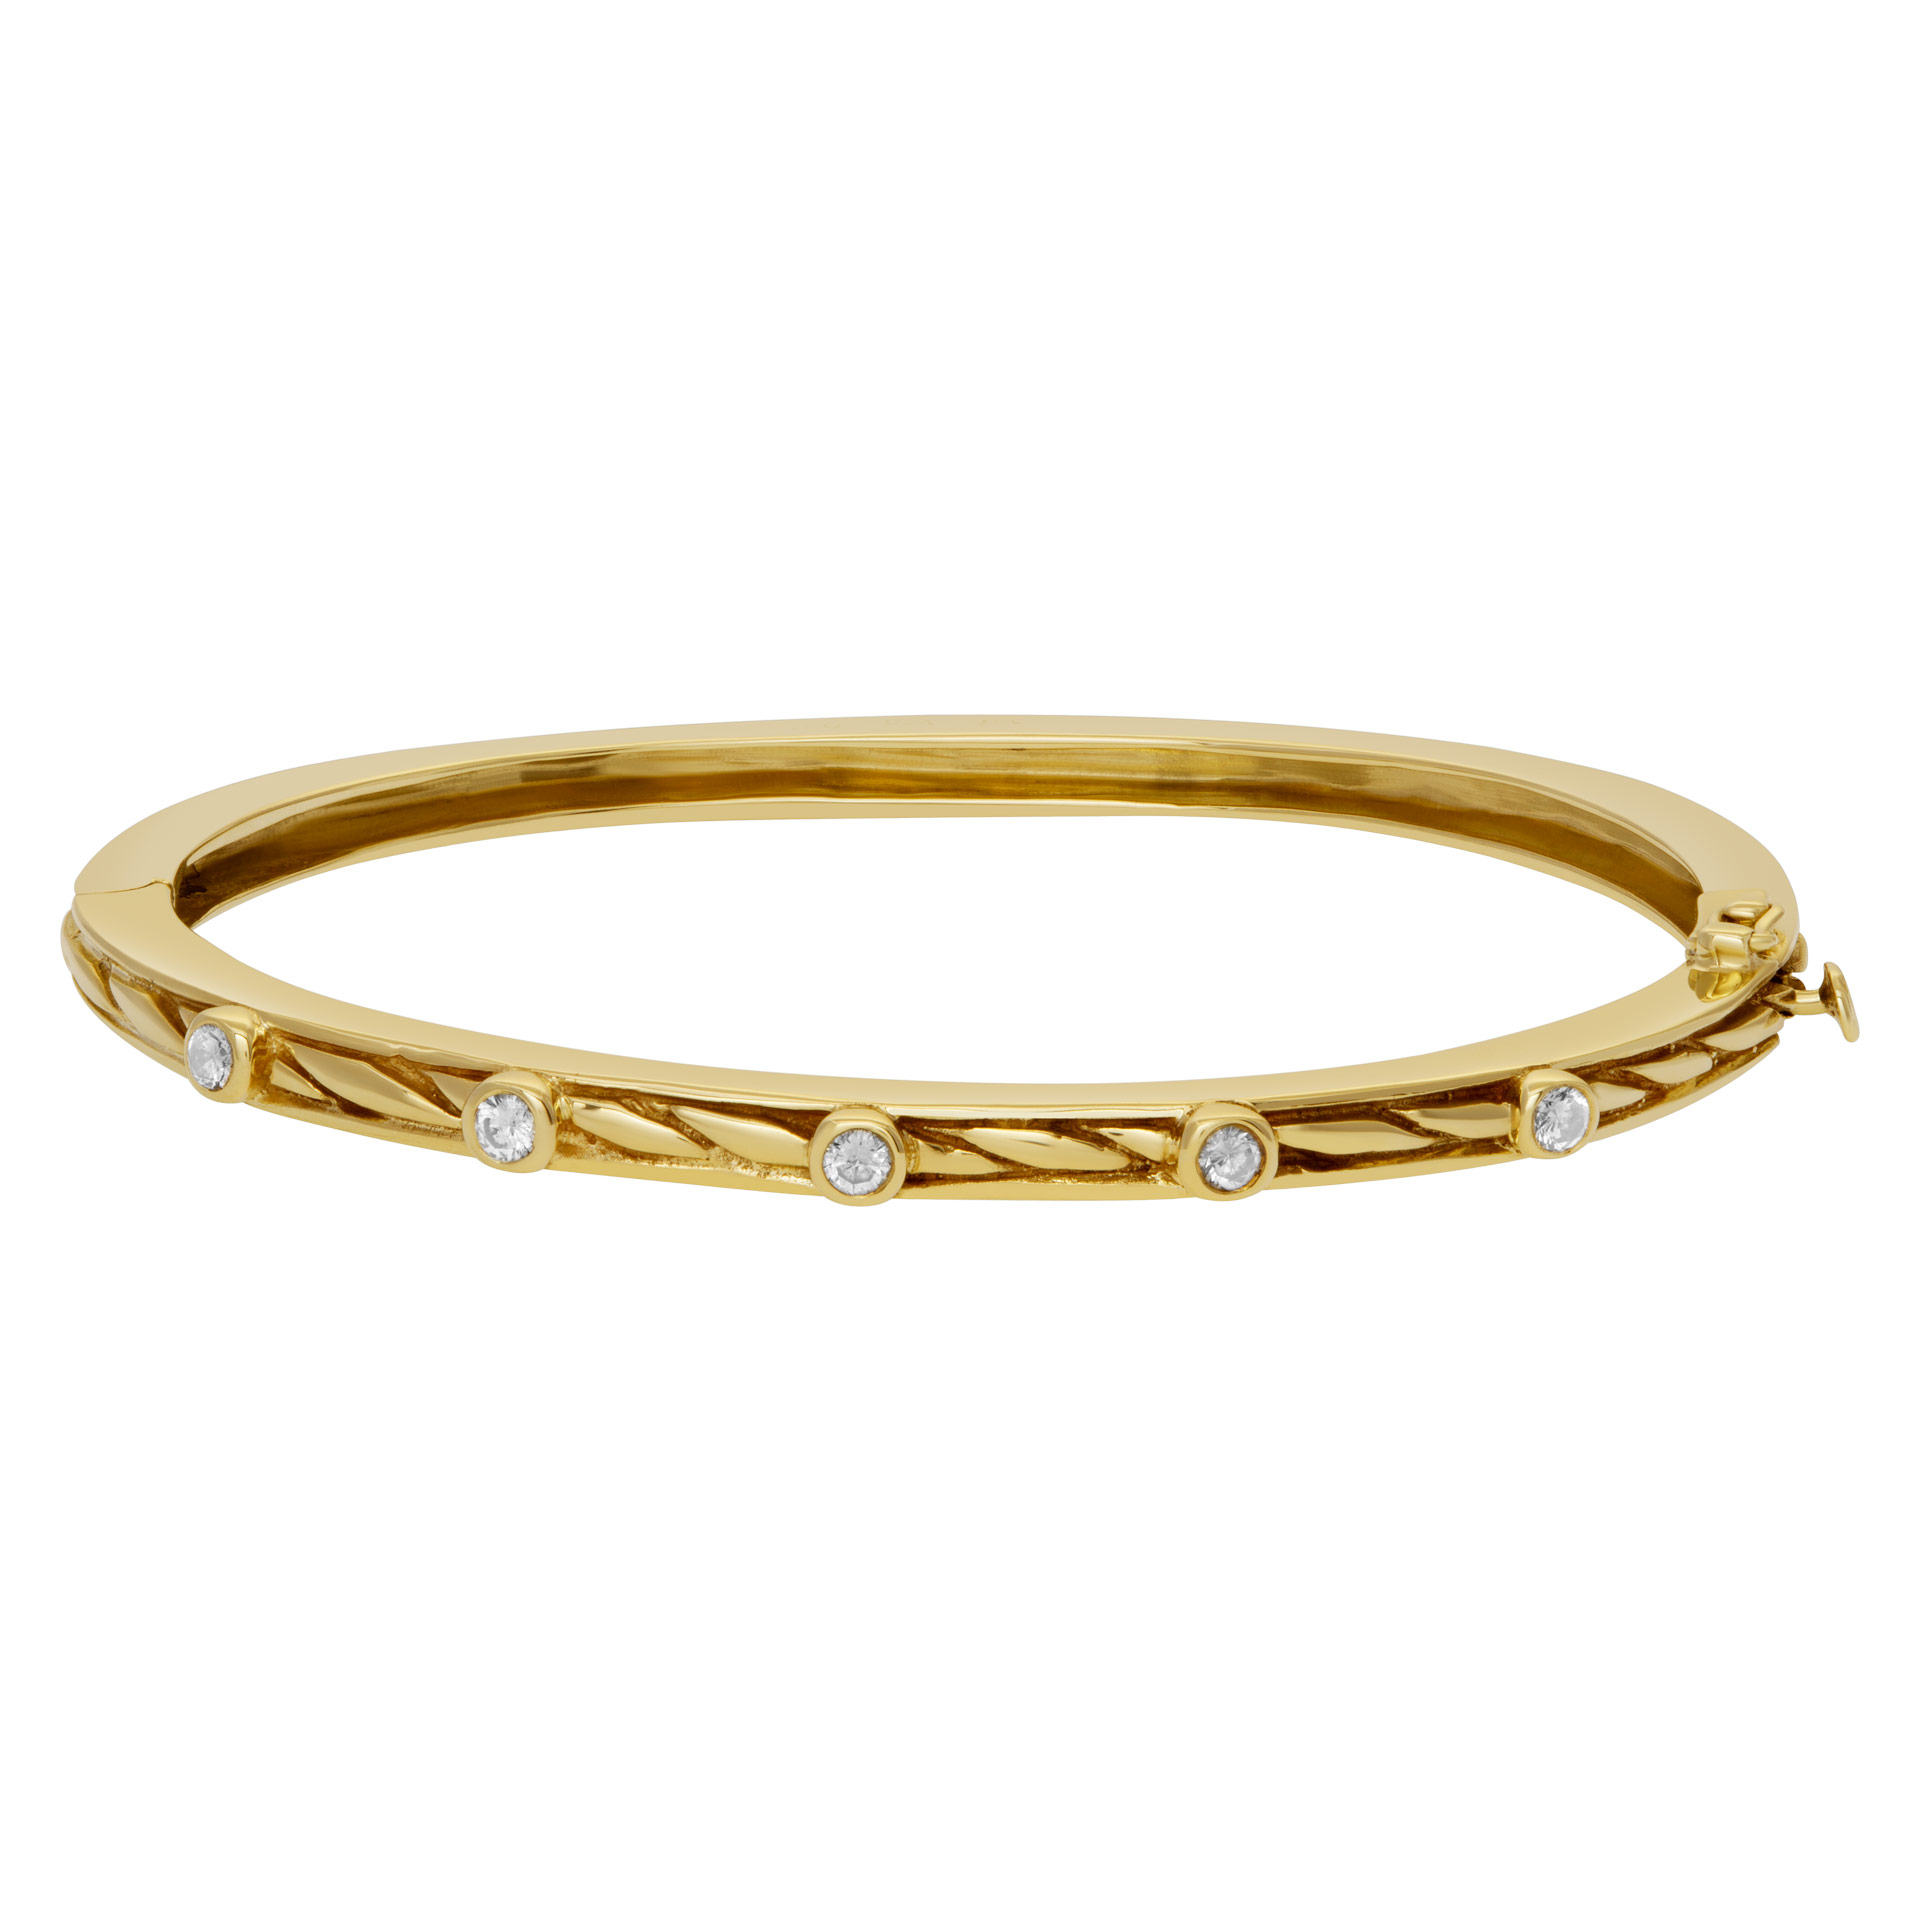 Bangle bracelet with 5 swirls in 14k yellow gold and diamonds